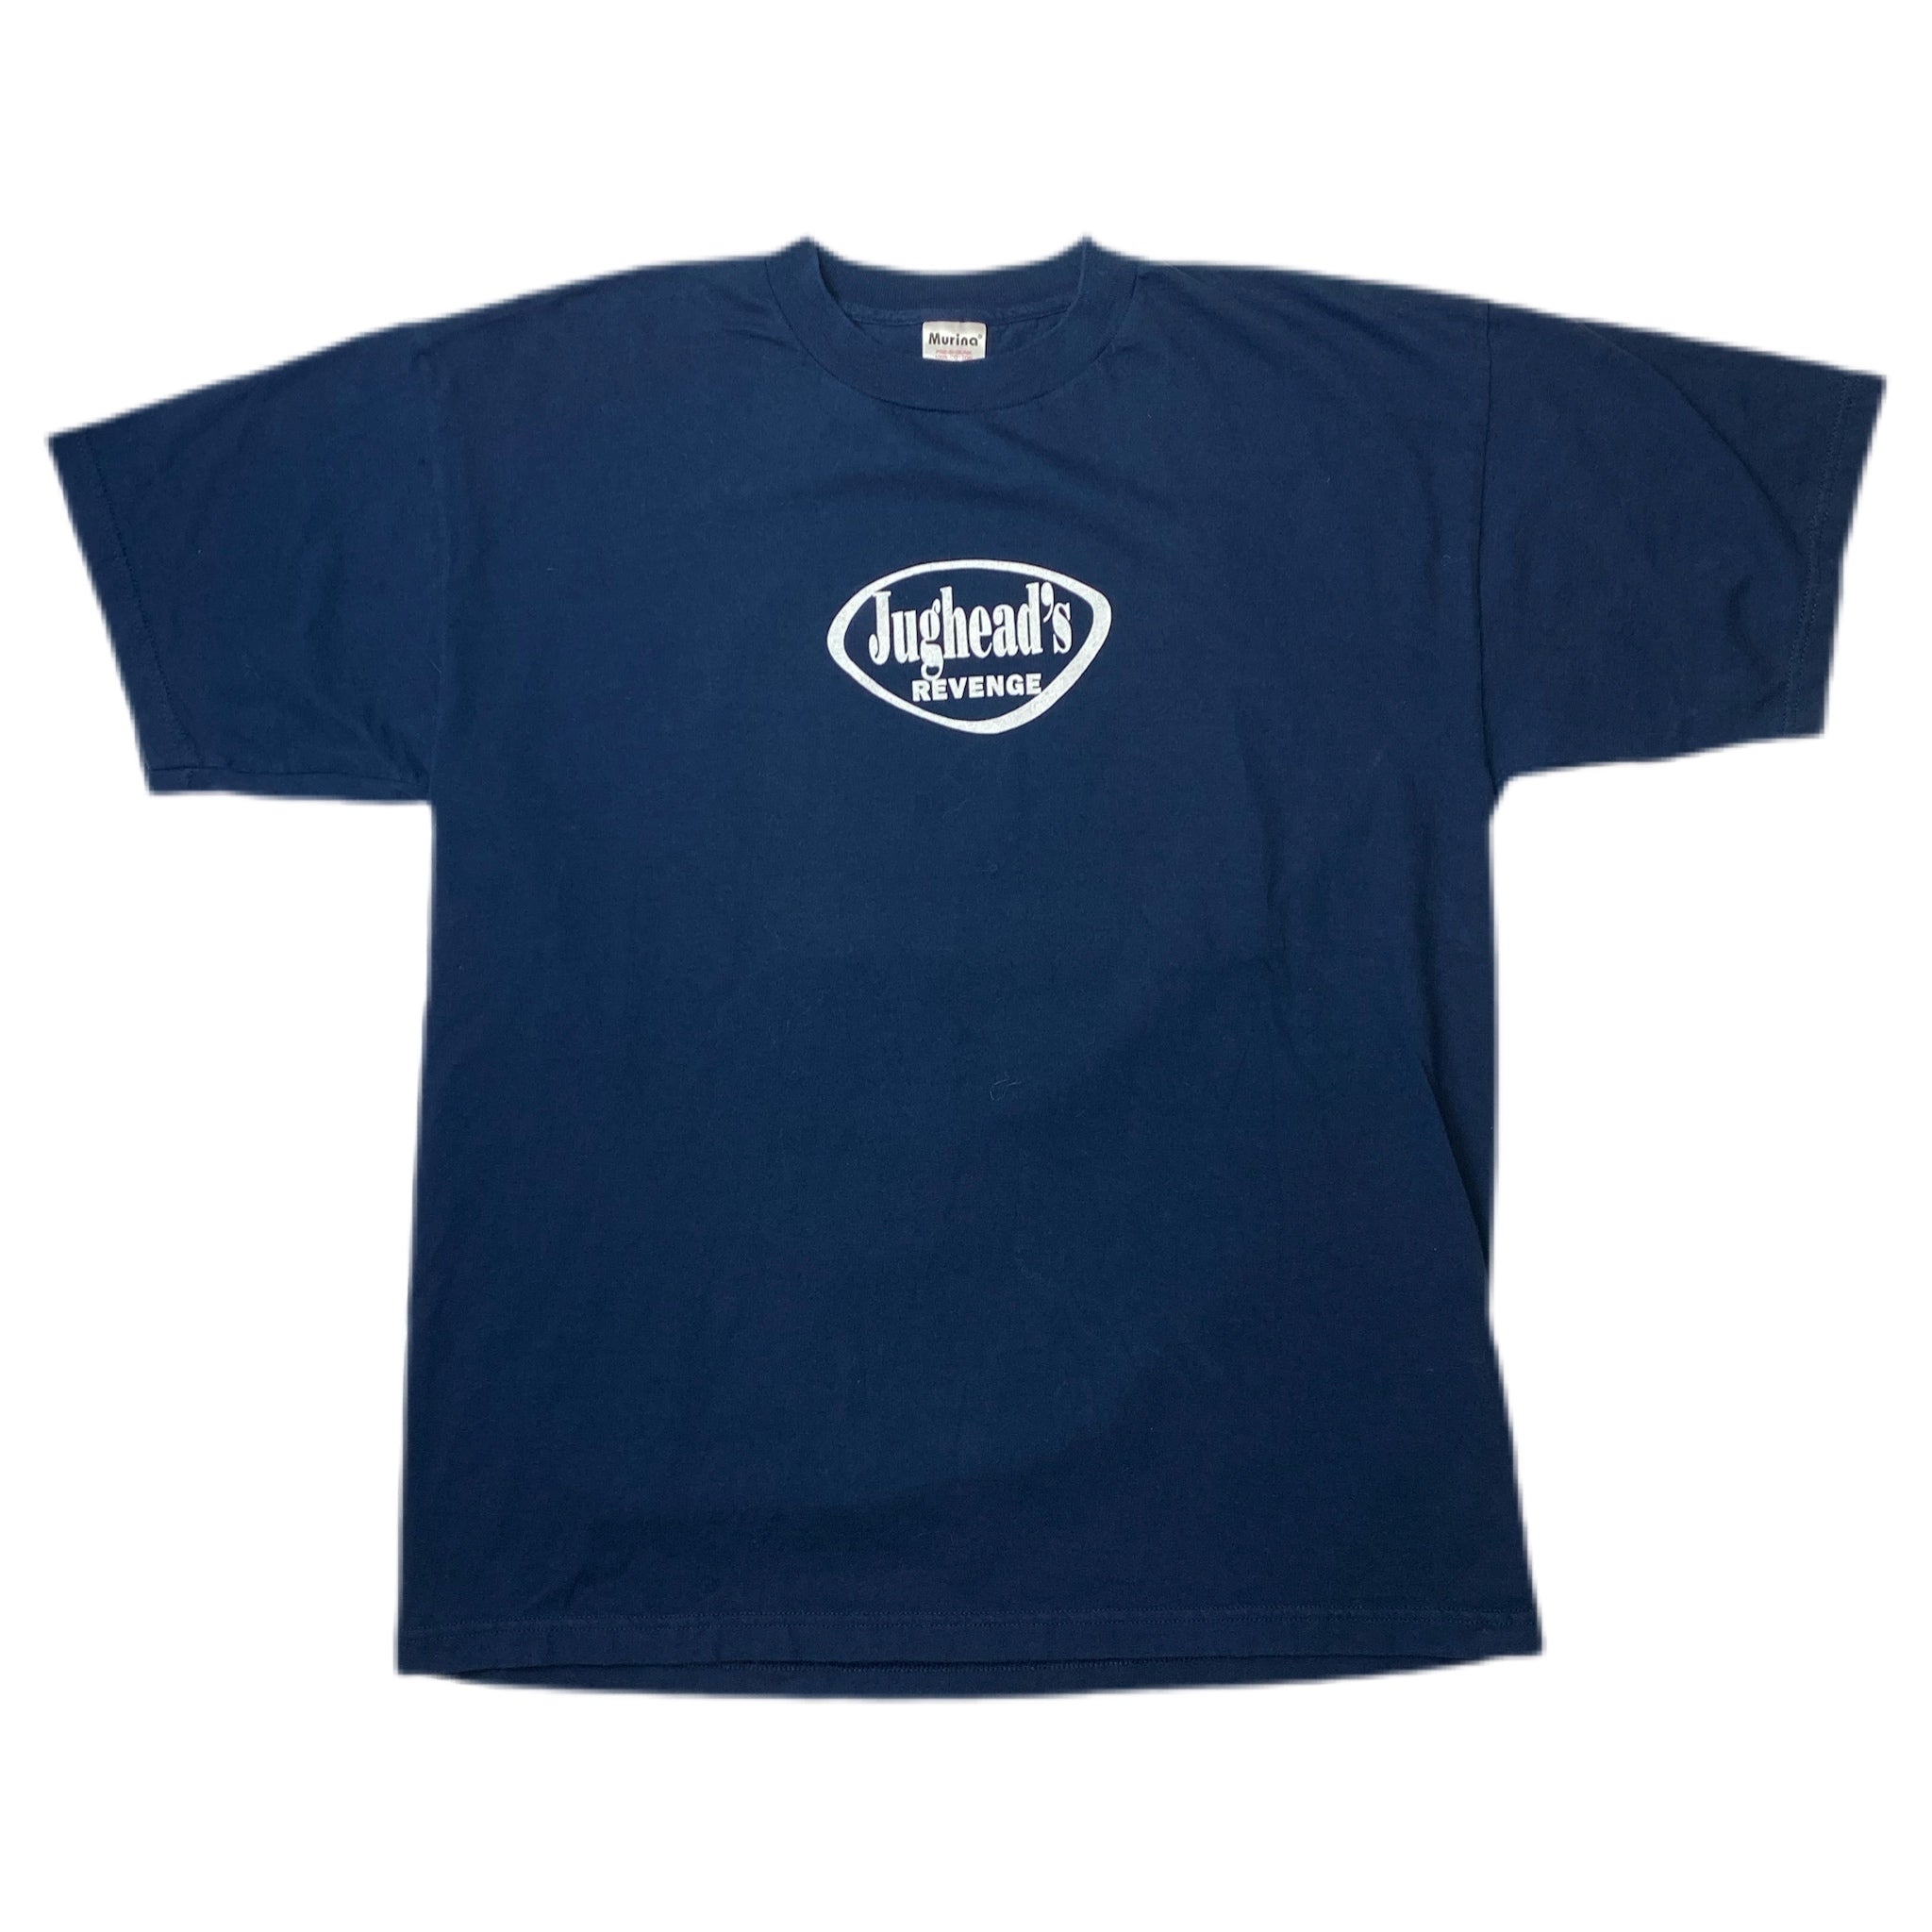 Vintage Jughead's Revenge Tour Shirt - Vintage Band Shirt